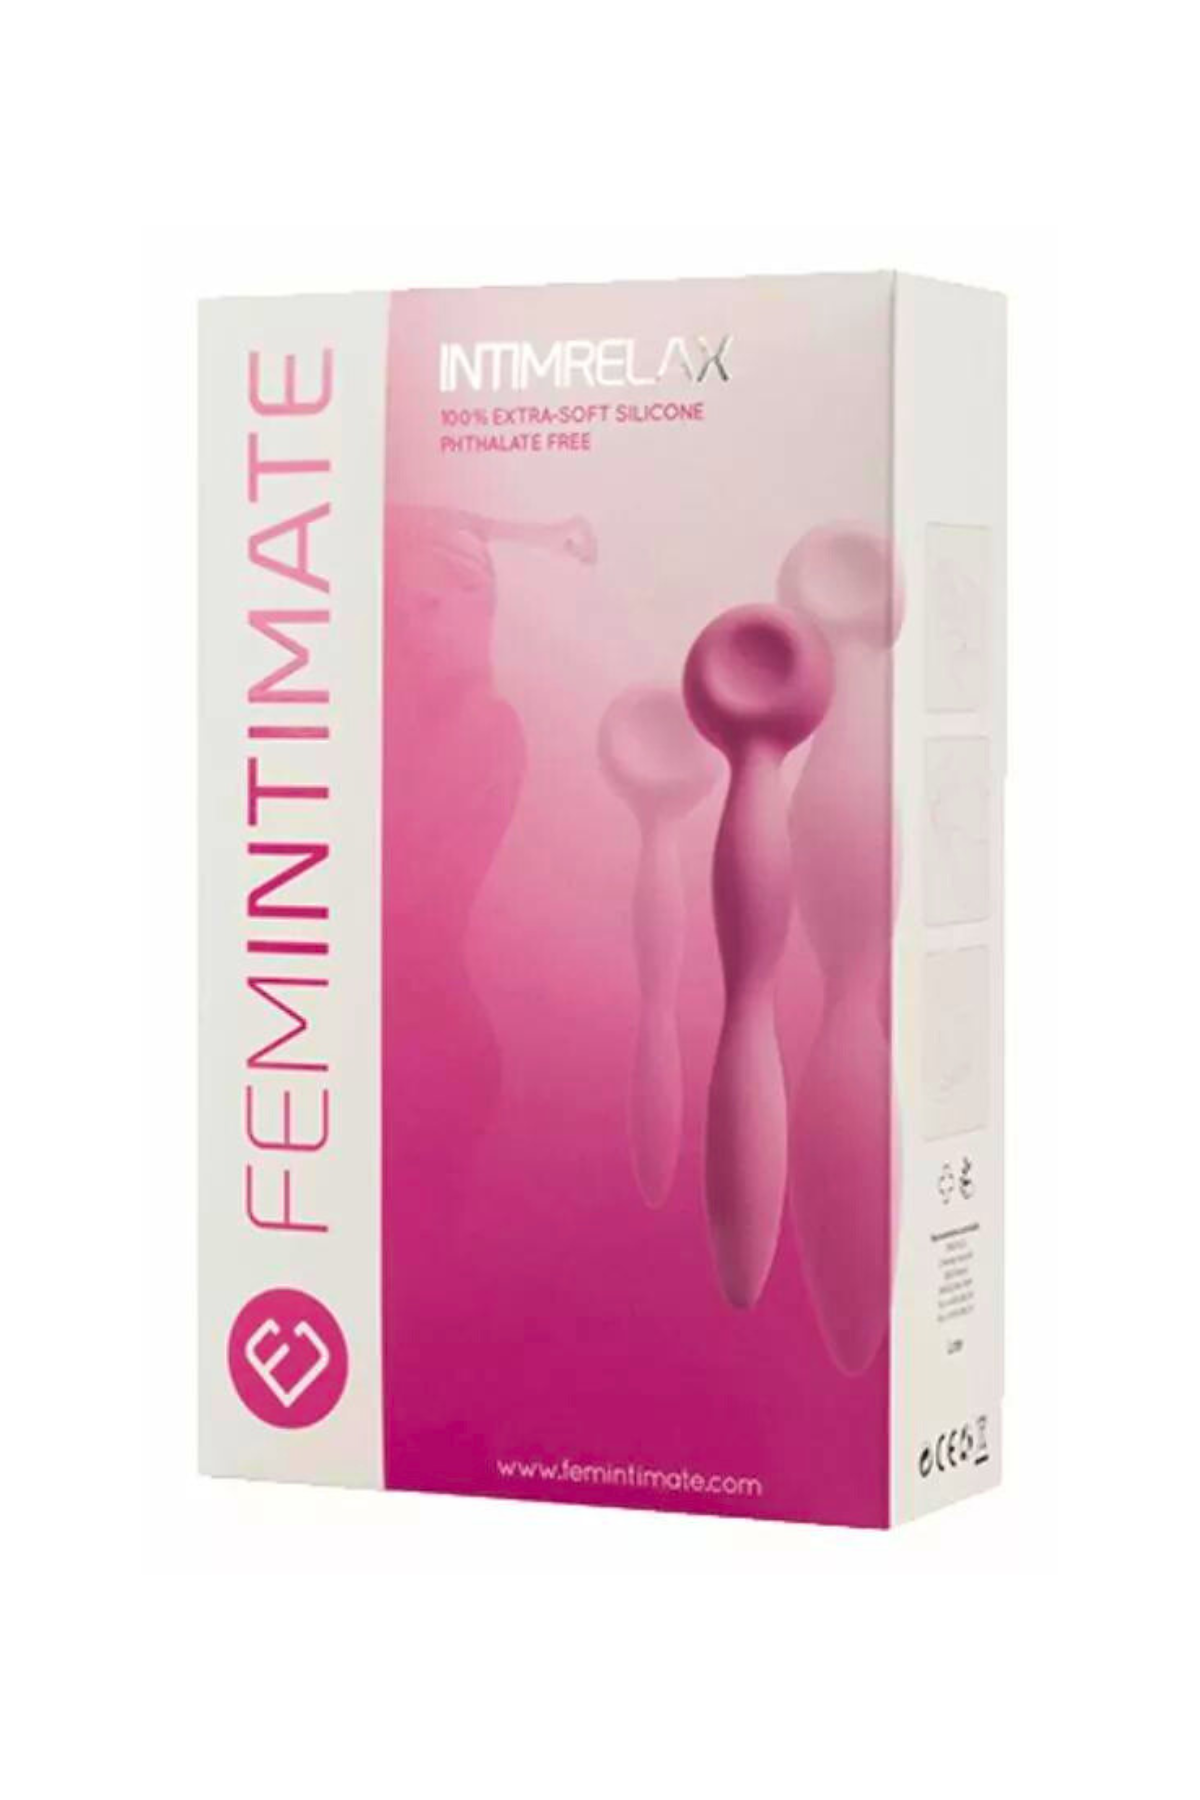 Intimrelax | 3PC Vaginal Dilator Kit